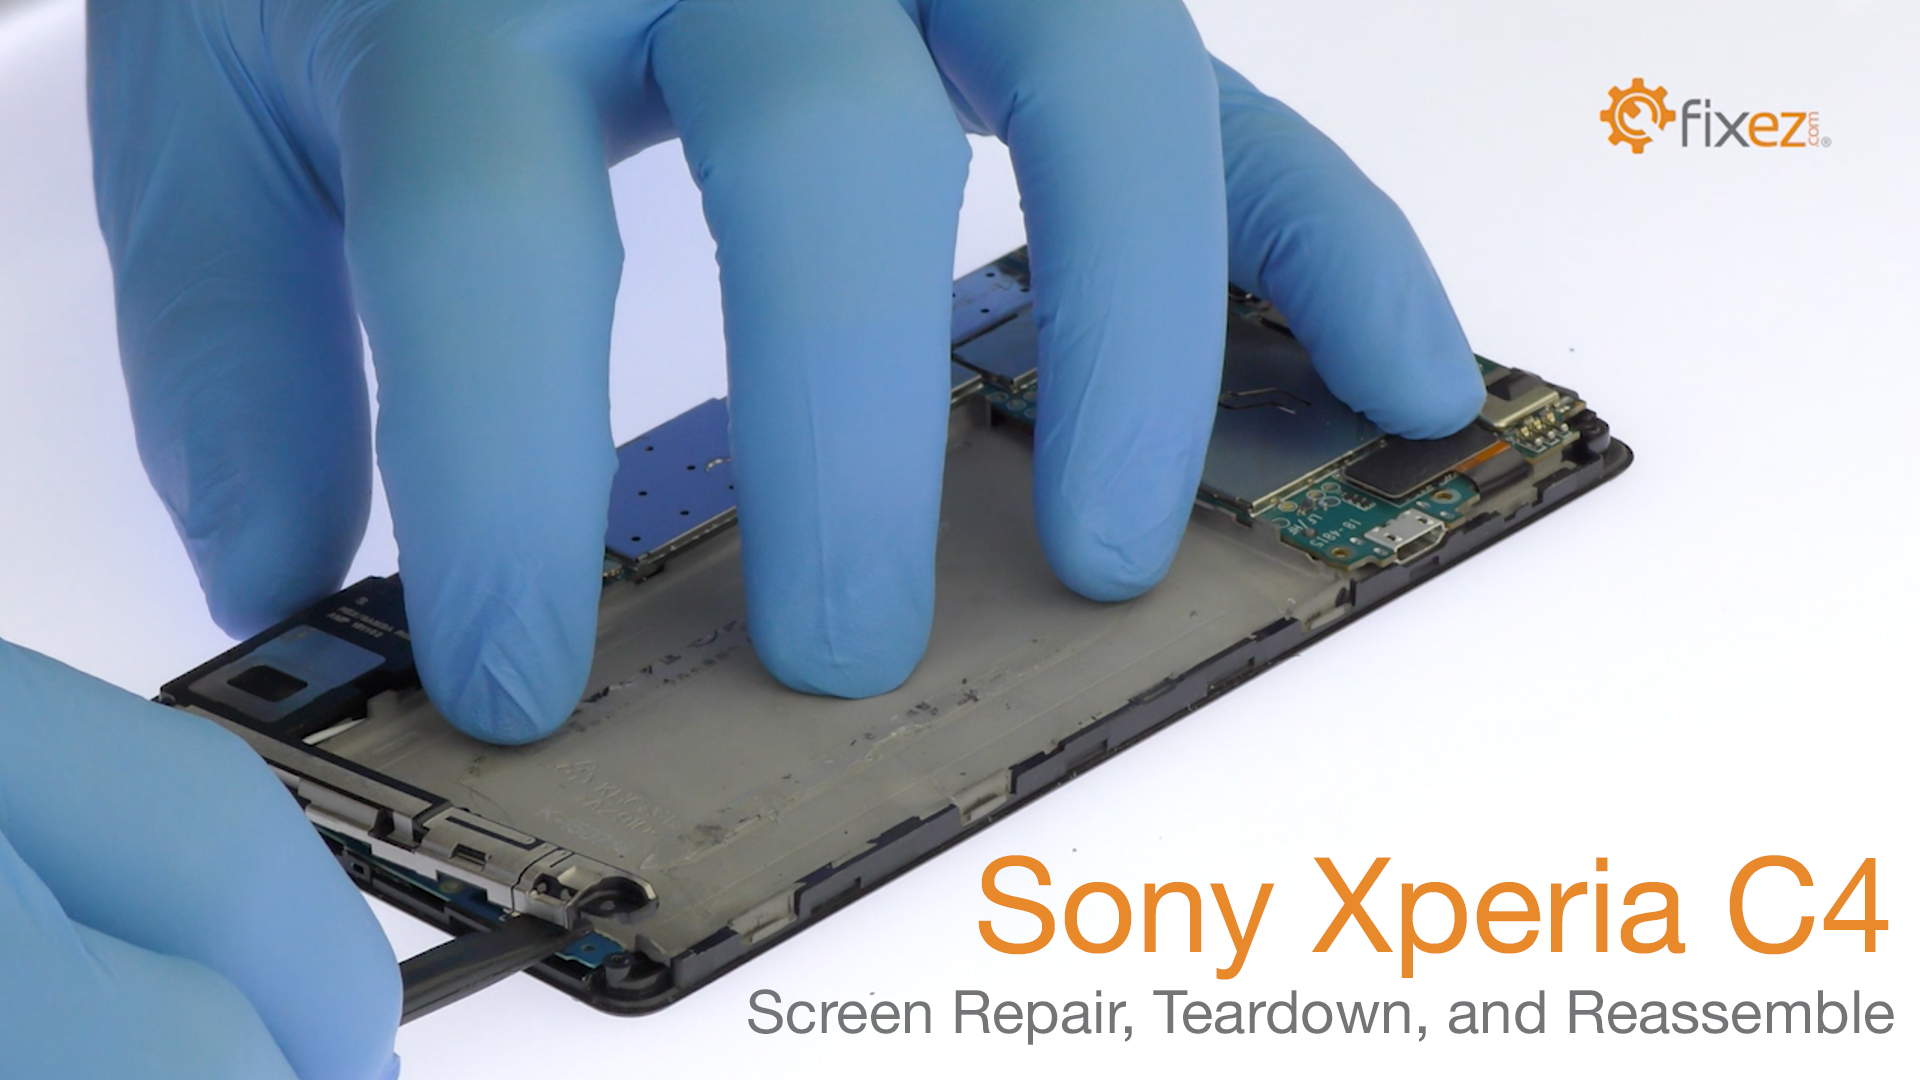 Sony Xperia C4 Screen Repair, Teardown and Reassemble